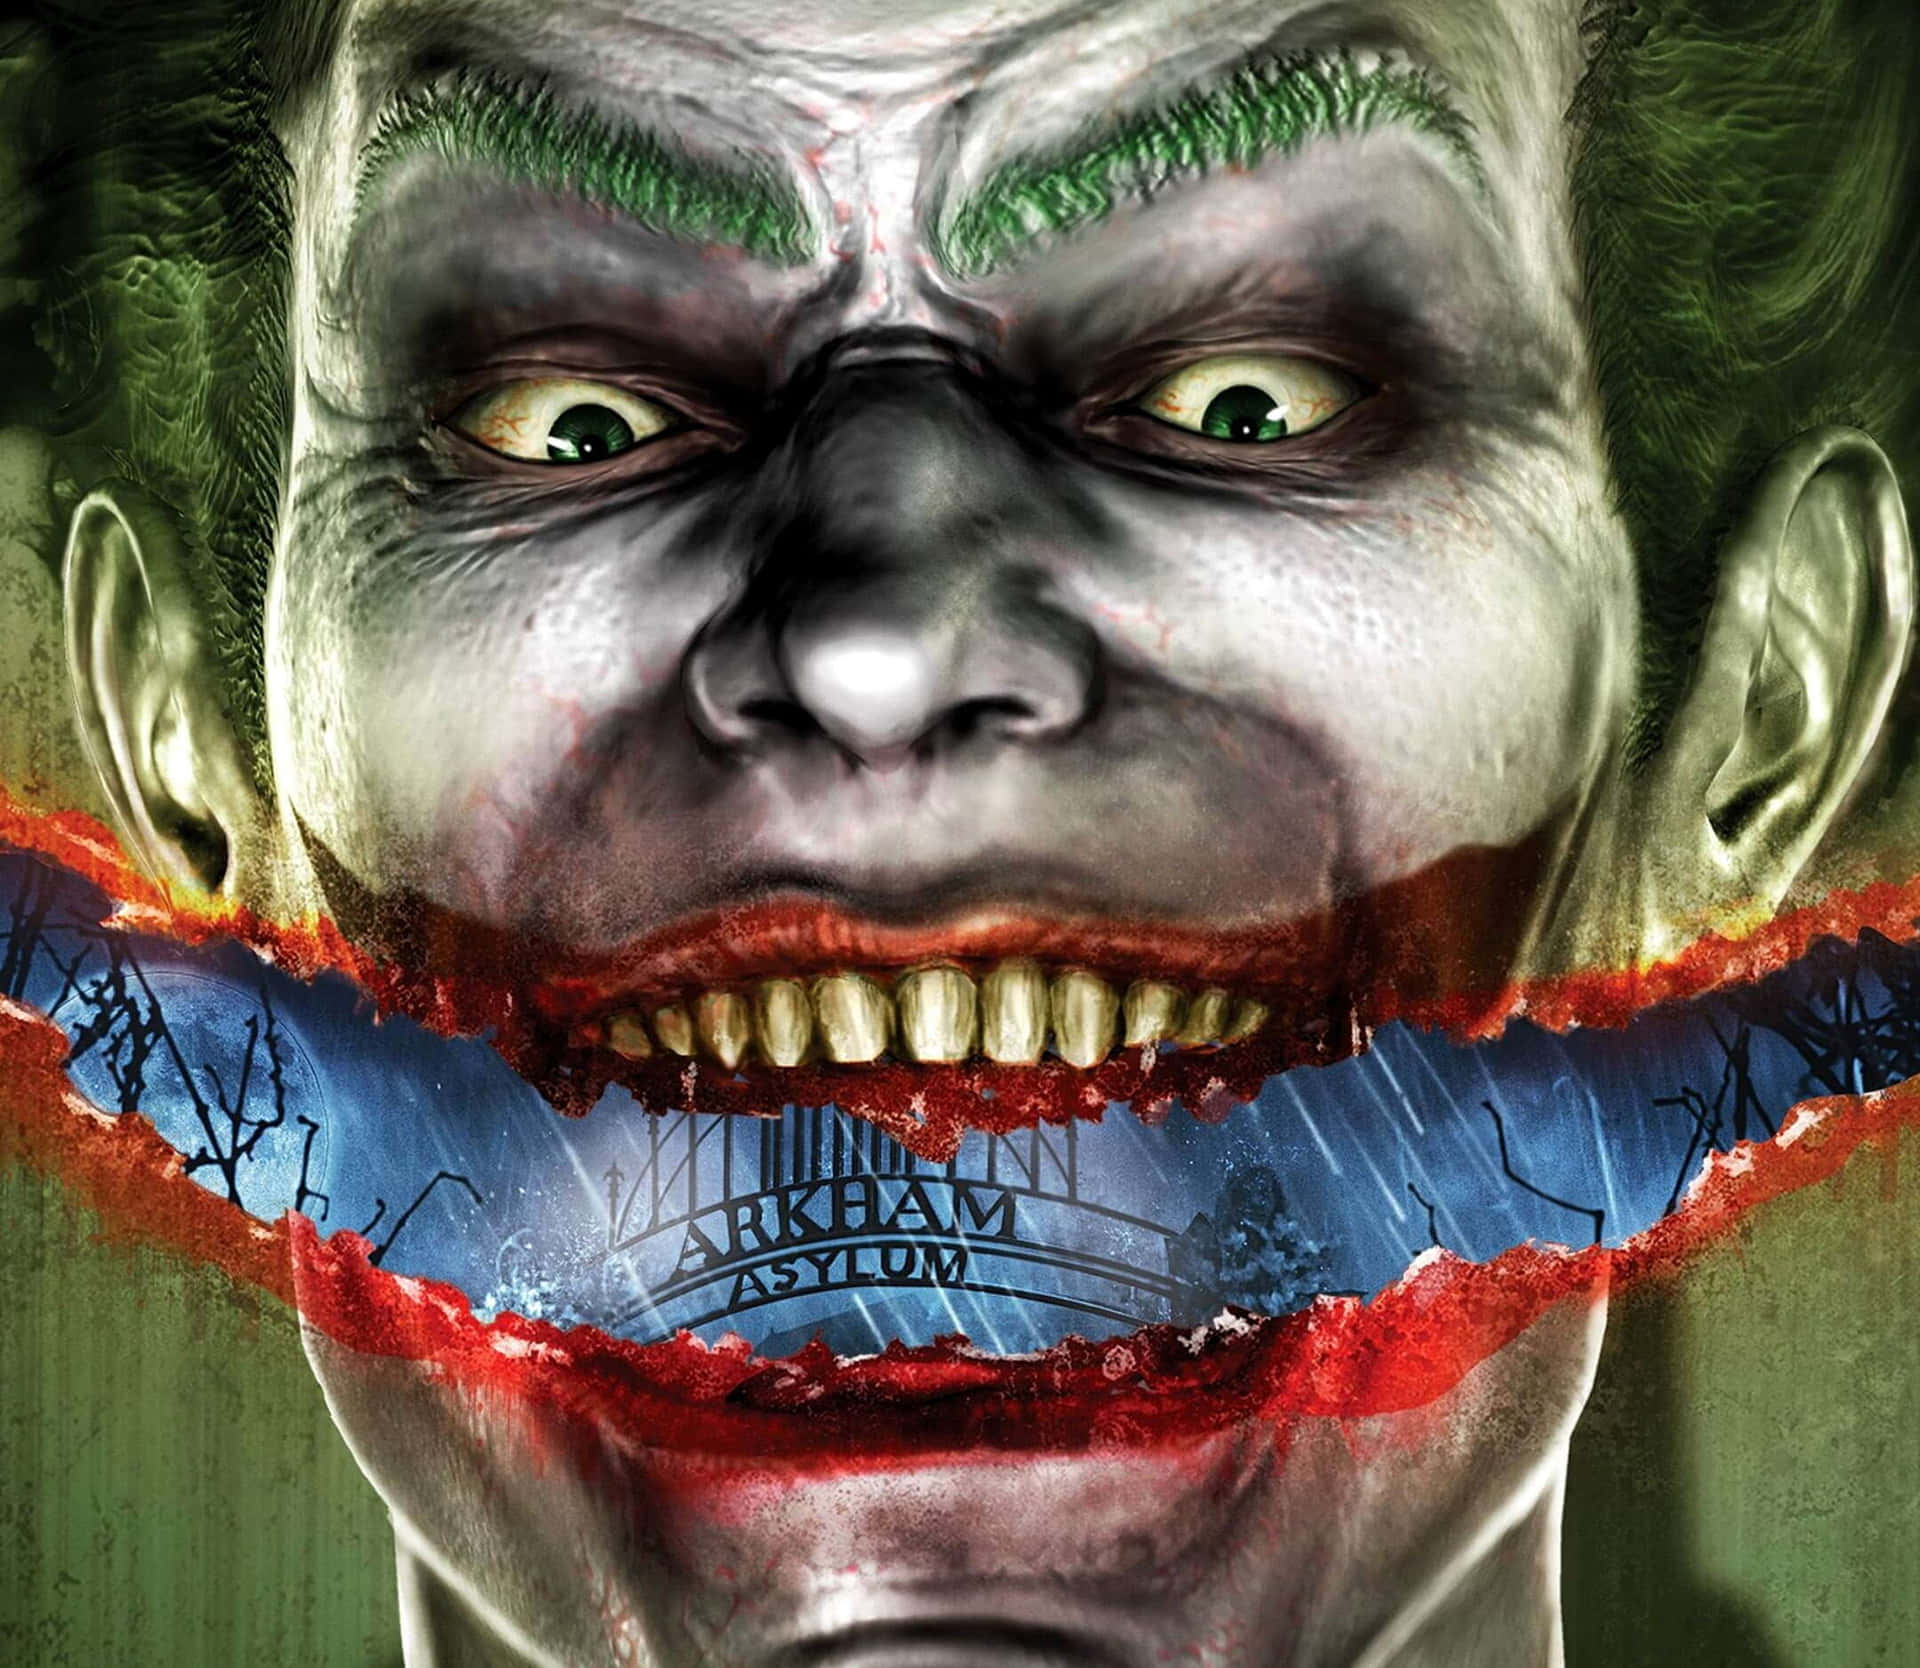 Joker Laughing Maniacally in Chilling Movie Scene Wallpaper